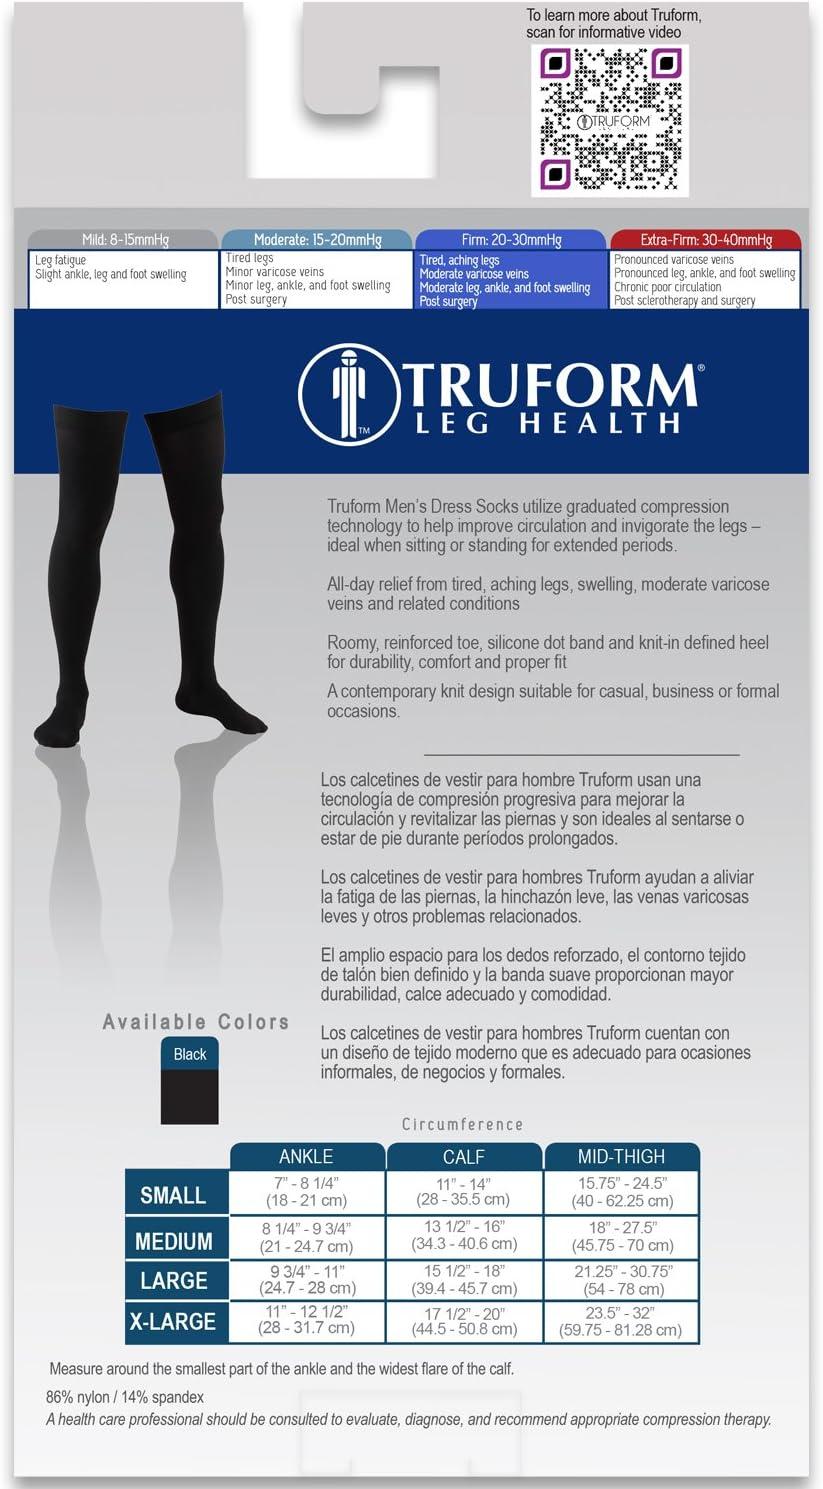 Truform Compression Socks 20-30 mmHg Men's Dress Socks Thigh High